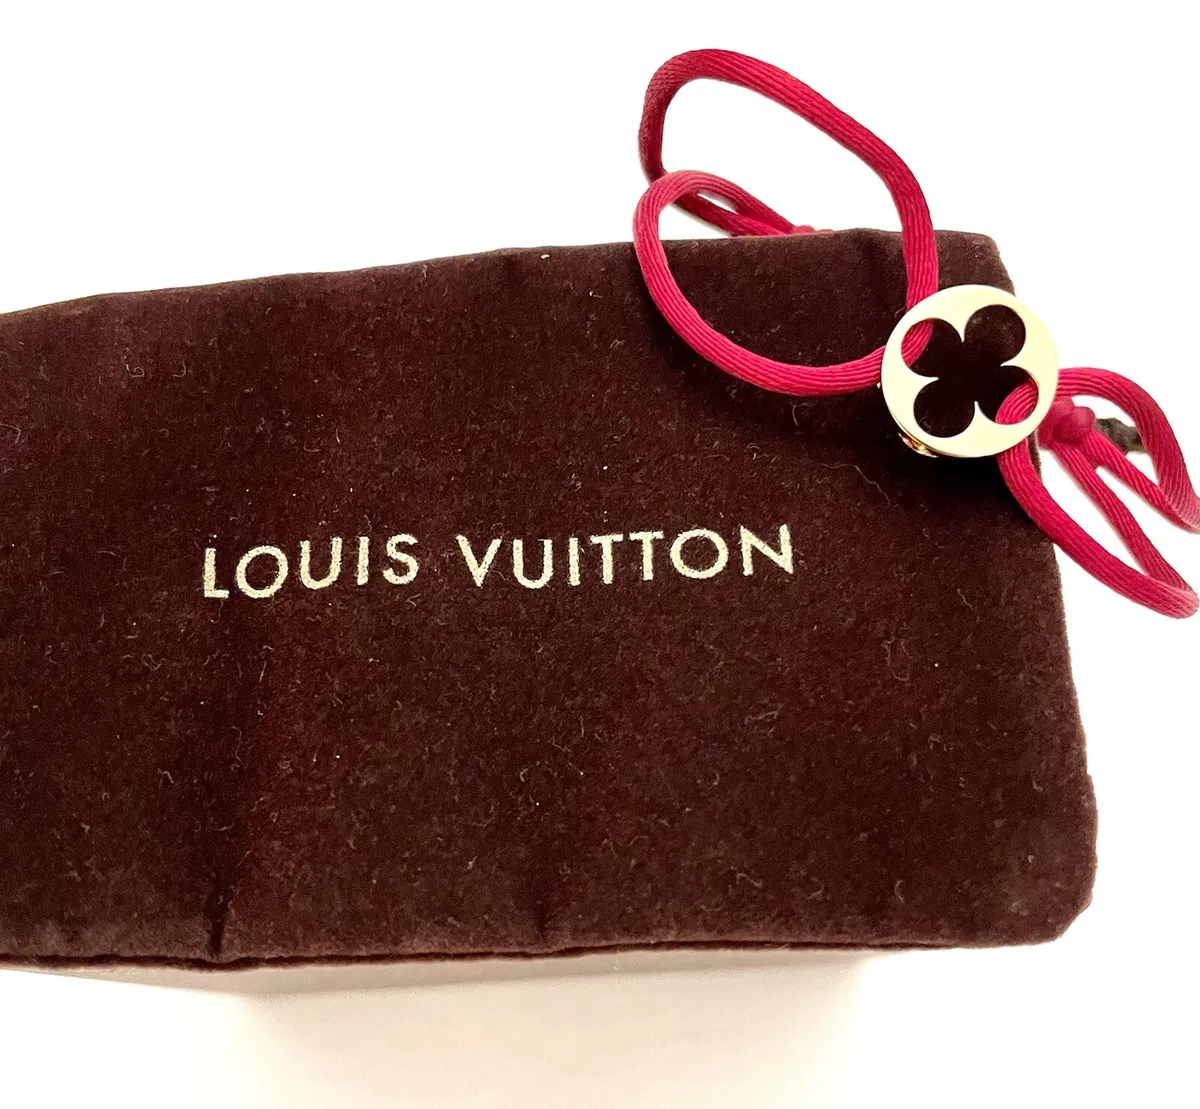 Louis Vuitton Empreinte Bracelet in 18k Rose Gold